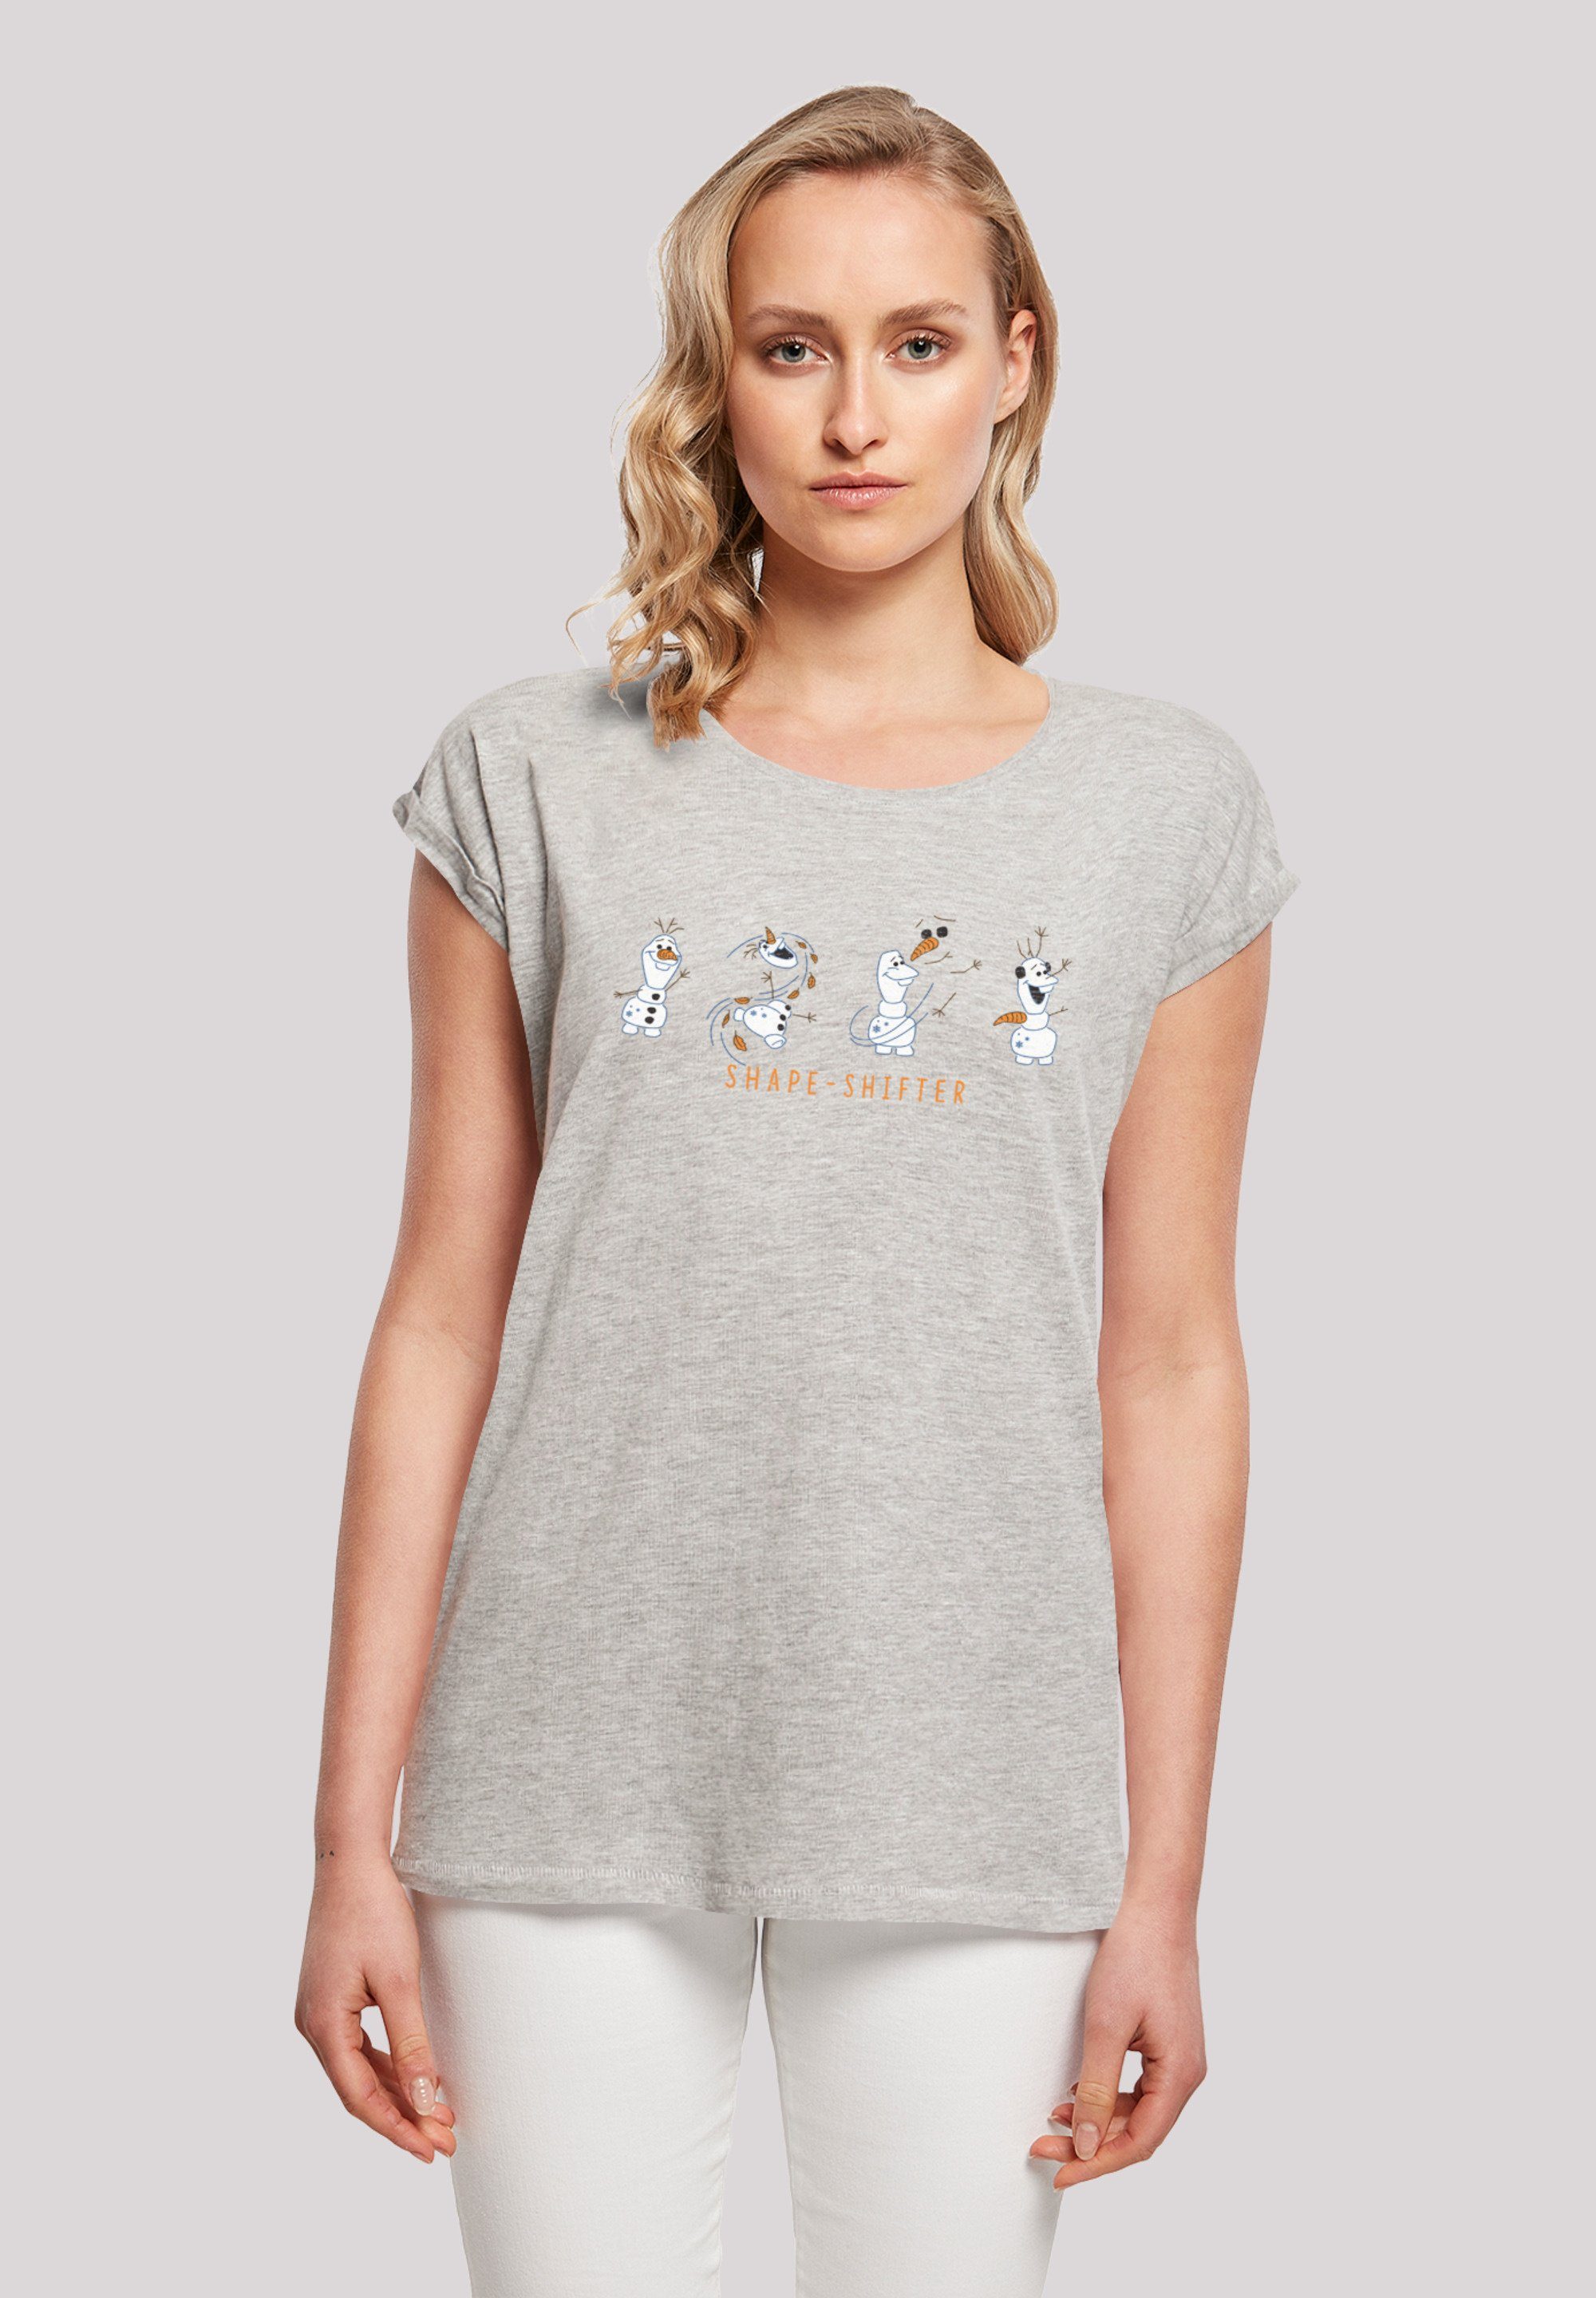 F4NT4STIC T-Shirt Disney Frozen 2 Olaf Shape-Shifter Print heather grey